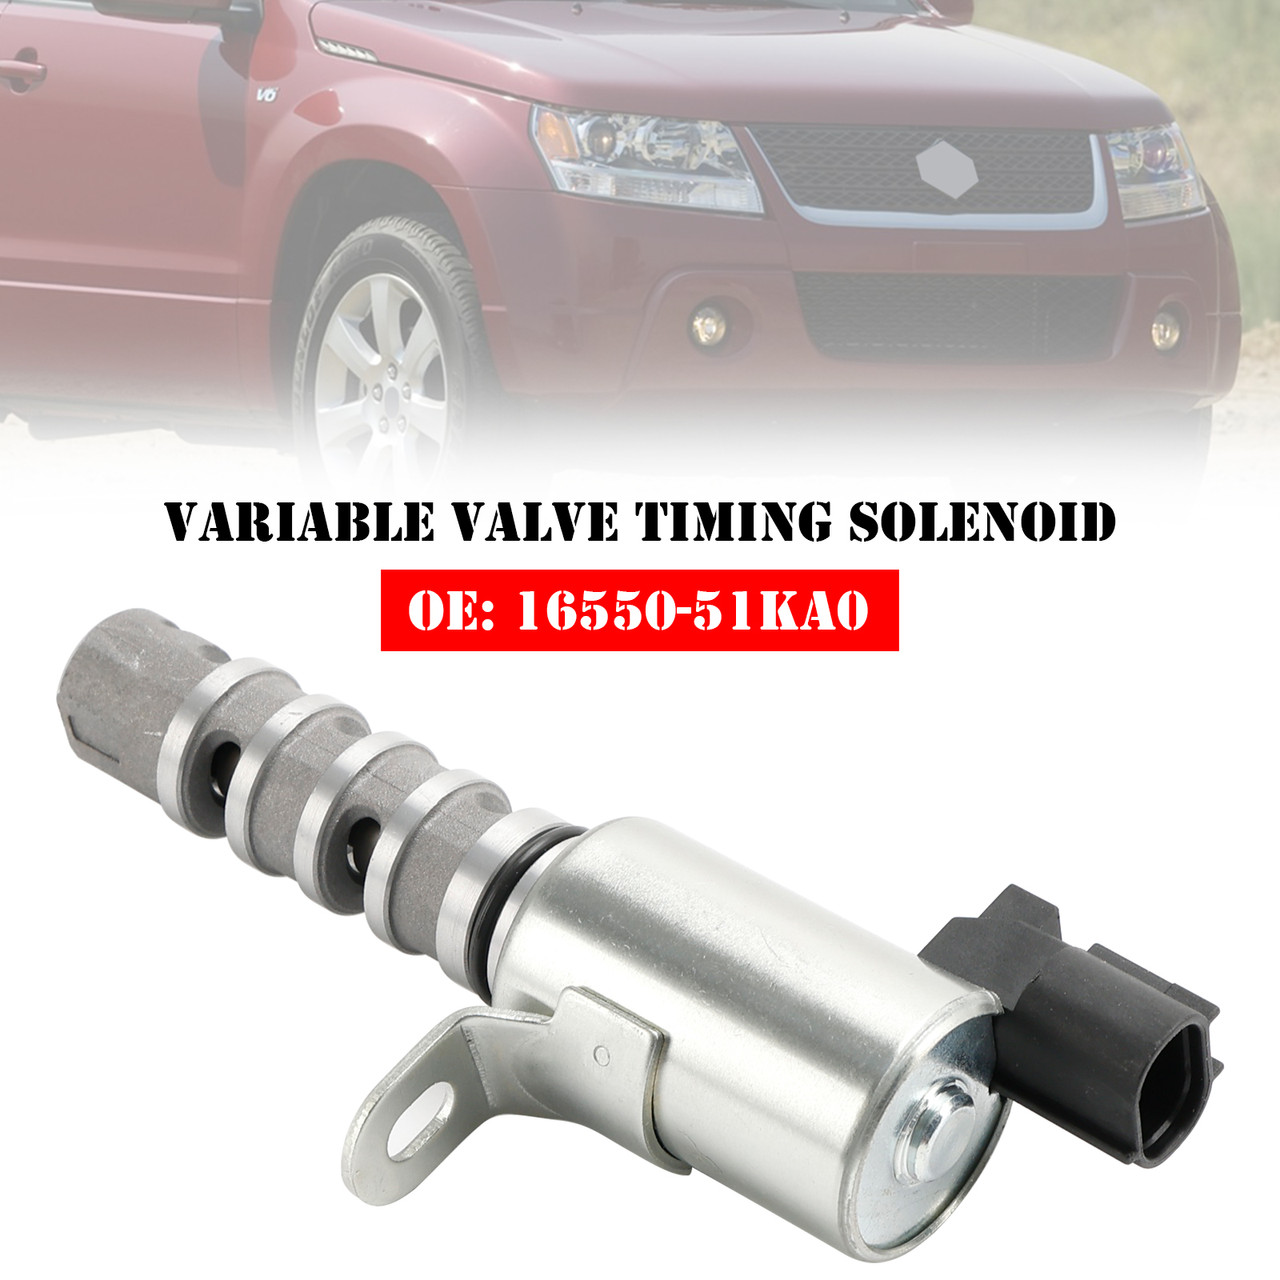 Variable Valve Timing VVT Solenoid for Suzuki Grand Vitara 2.4L 16550-51KA0